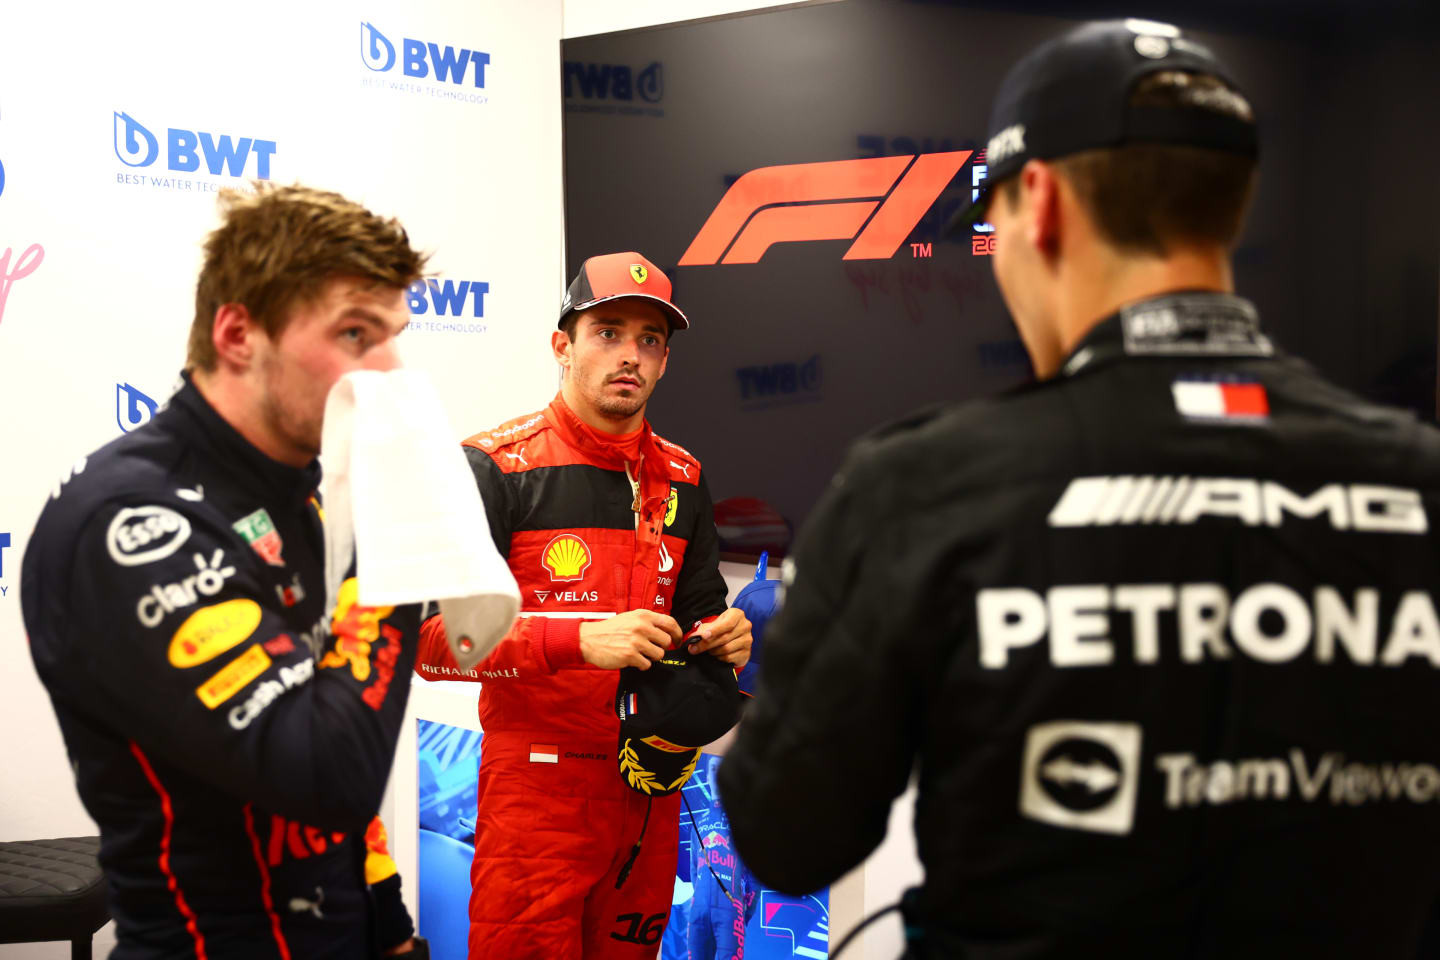 ZANDVOORT, NETHERLANDS - SEPTEMBER 04: Third placed Charles Leclerc of Monaco and Ferrari talks